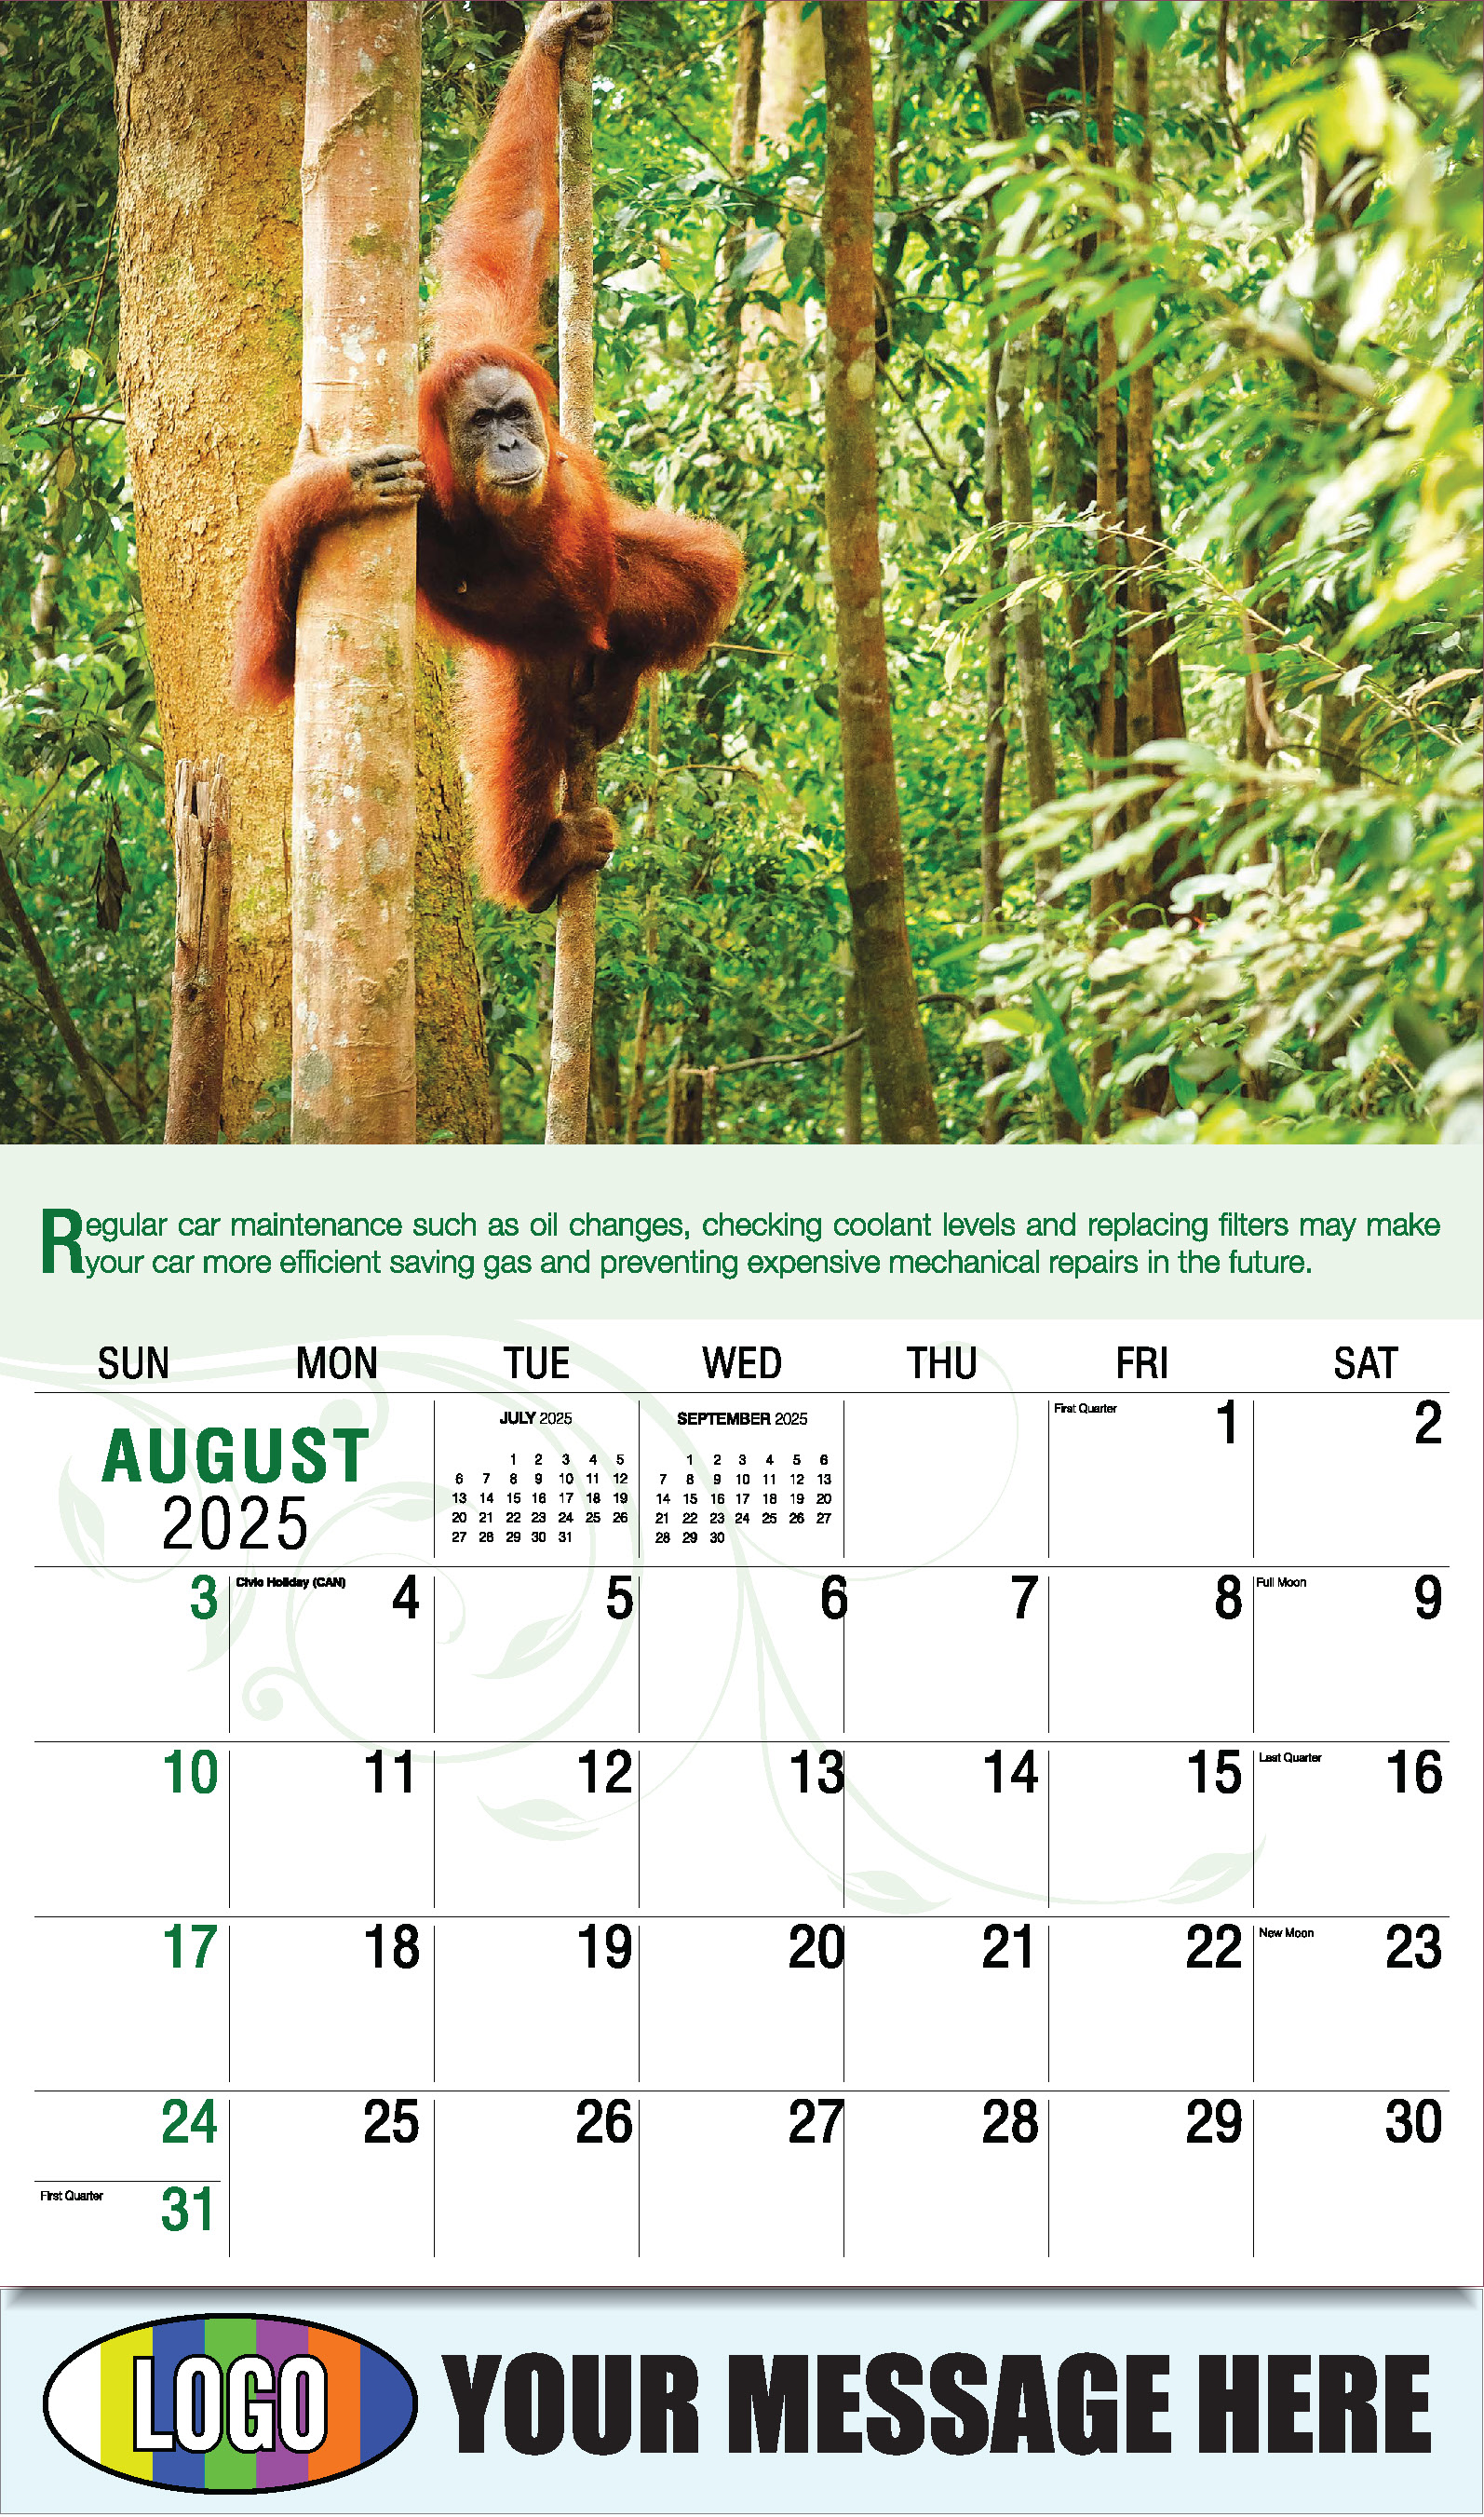 Go Green 2025 Business Promotion Calendar - August